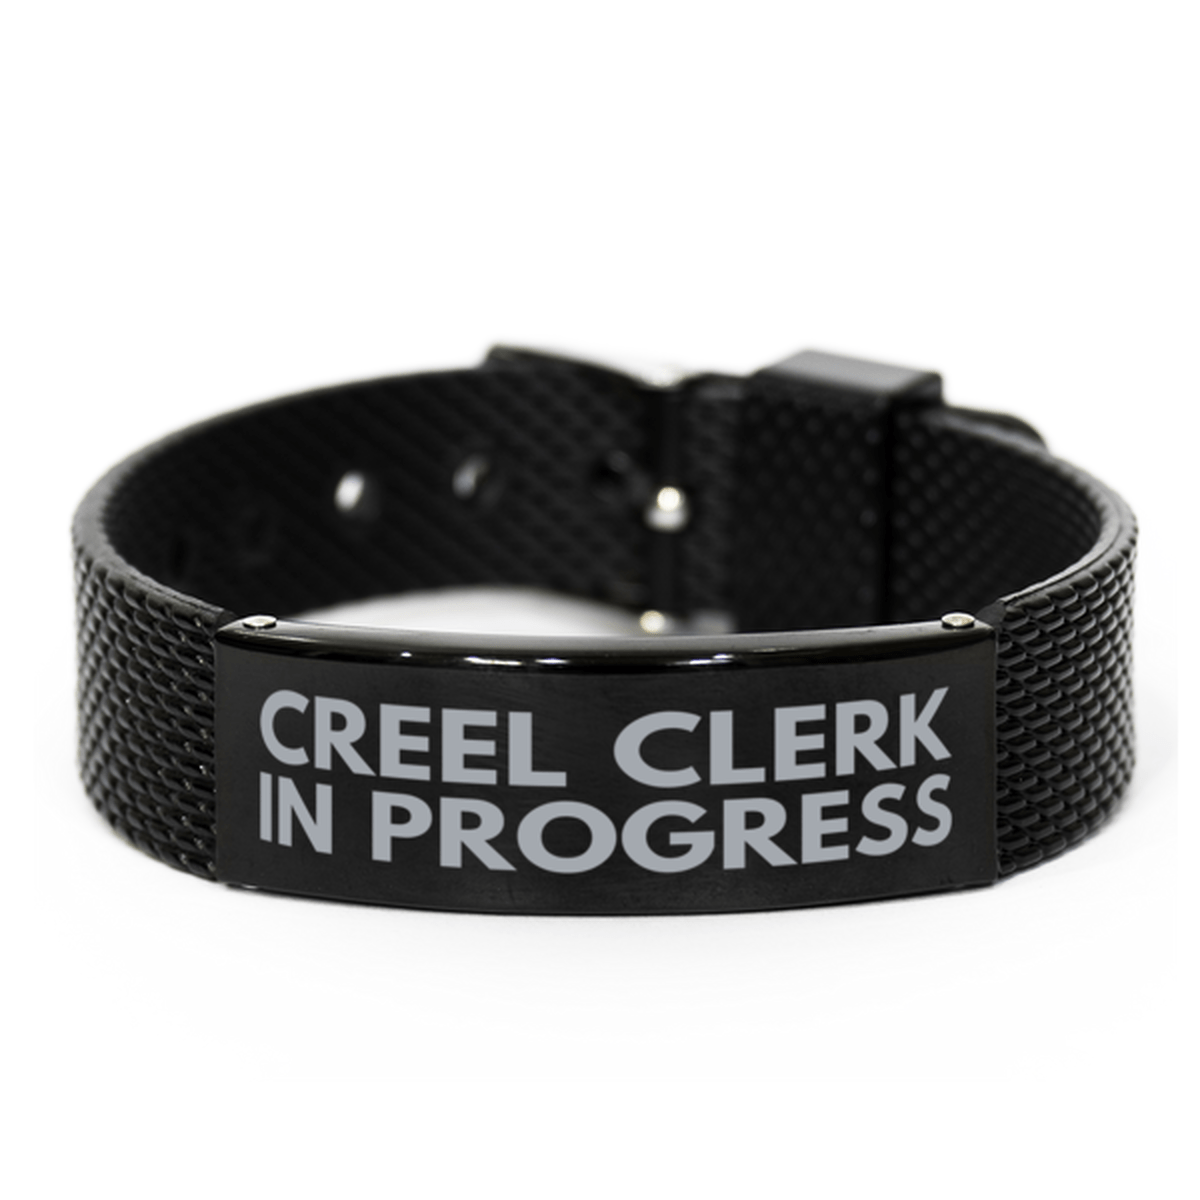 Inspirational Creel Clerk Black Shark Mesh Bracelet, Creel Clerk In Progress, Best Graduation Gifts for Students